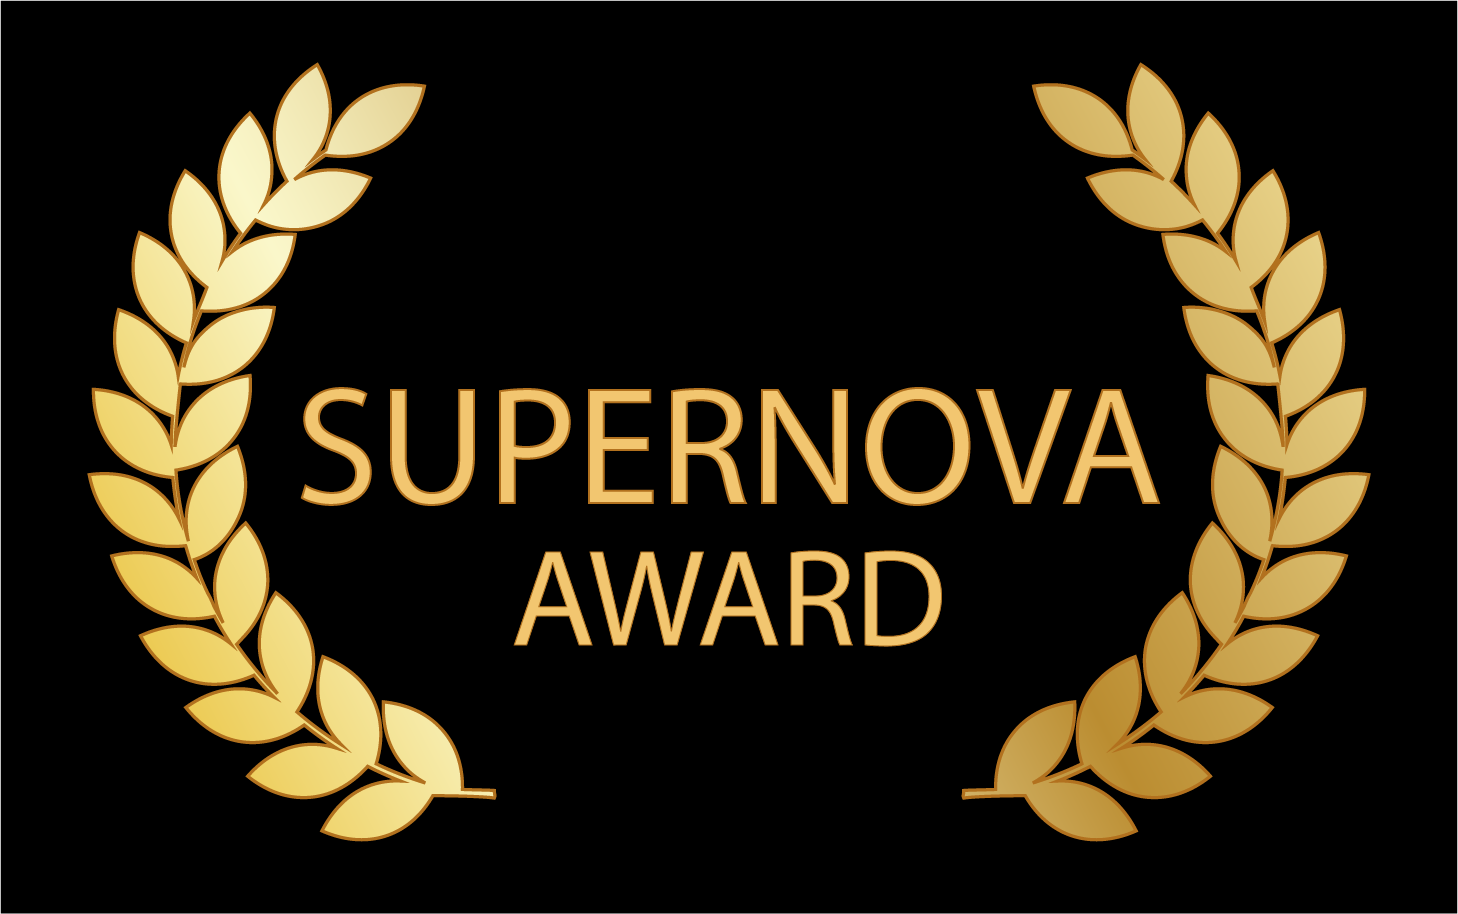 Supernova Award